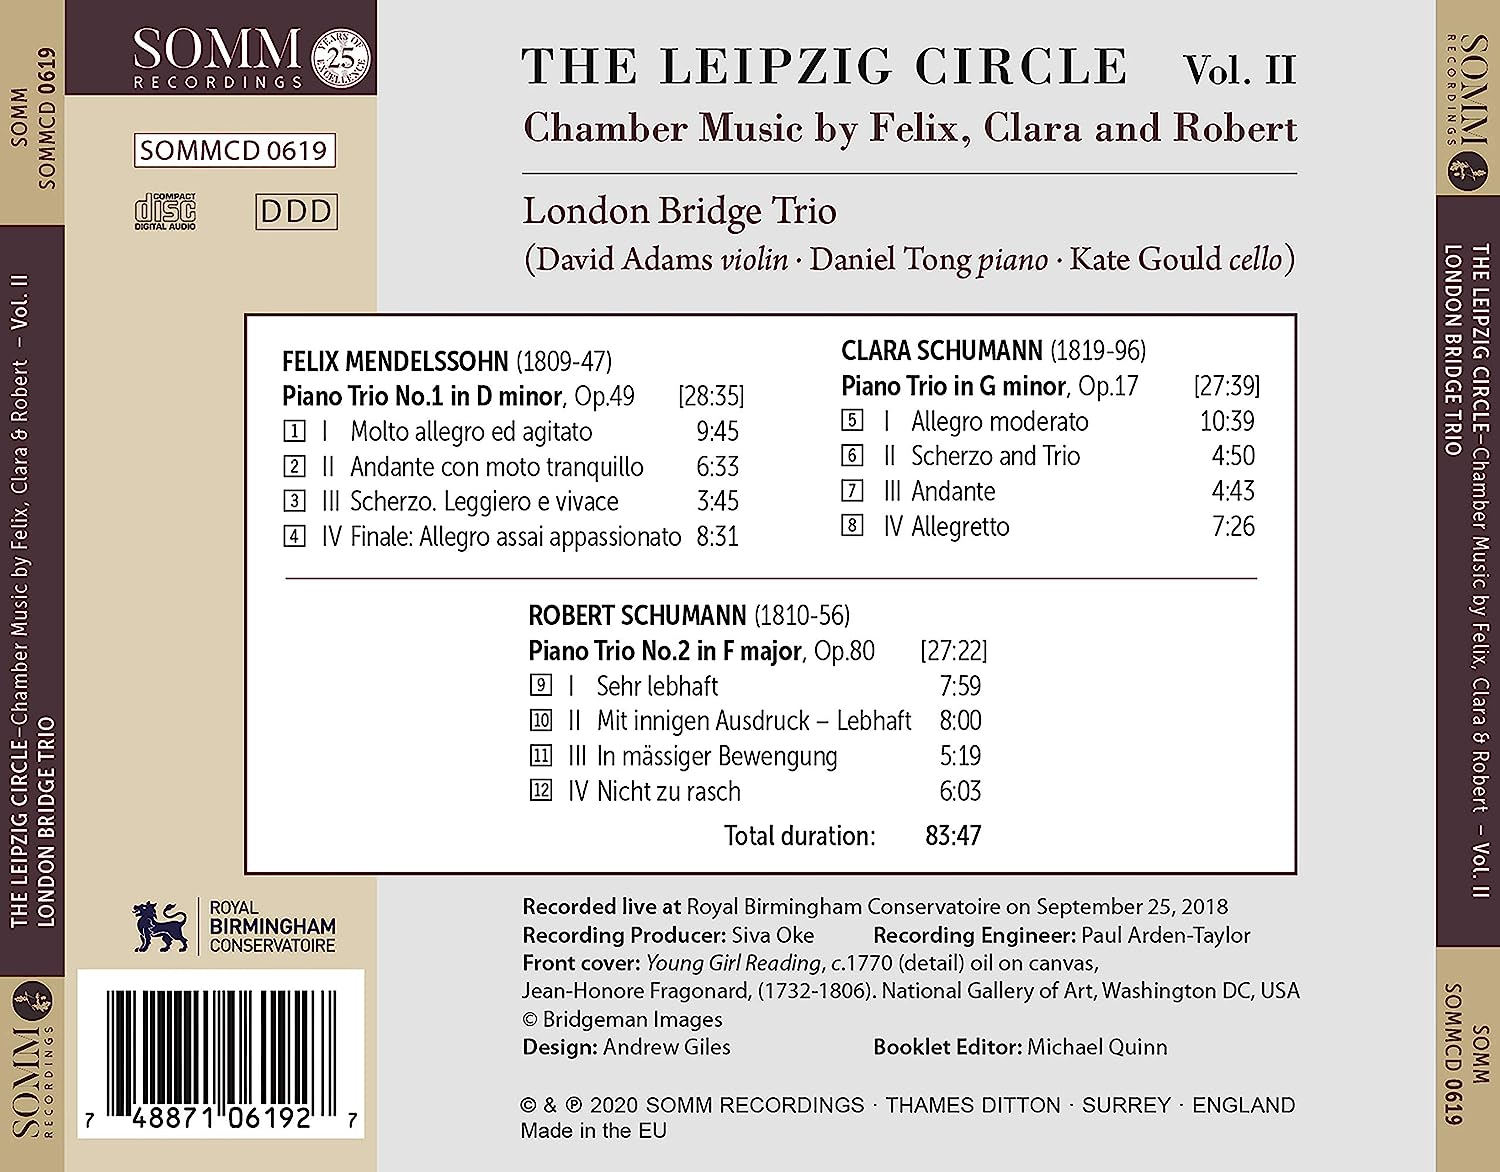 The London Bridge Trio  라이프치히 서클 2집 - 클라라 & 슈만 / 멘델스존: 피아노 트리오 (The Leipzig Circle Vol.2)